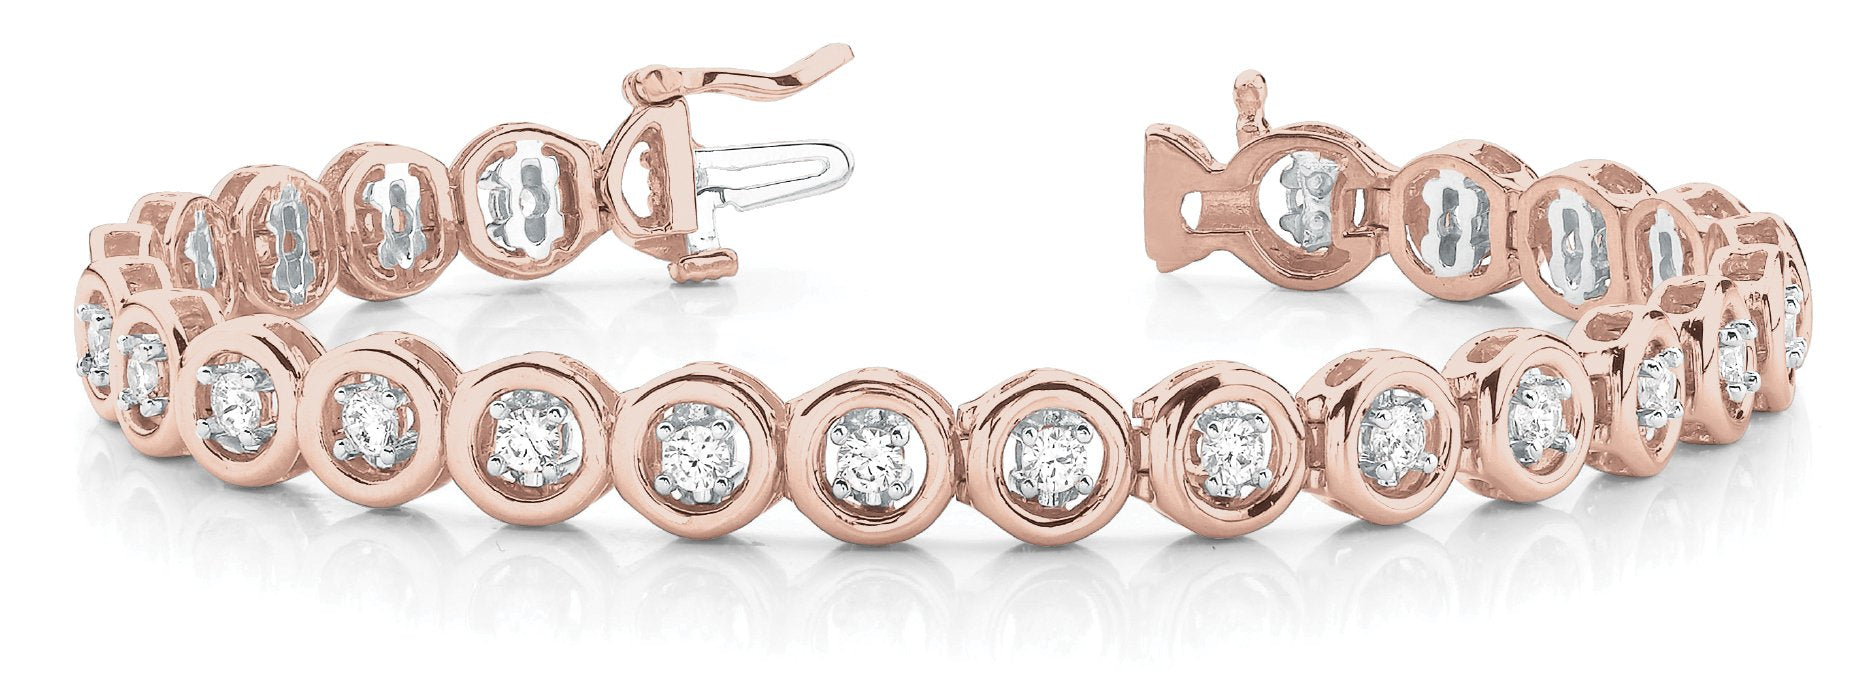 Fancy Diamond Bracelet Ladies 1.19ct tw - 14kt Rose Gold